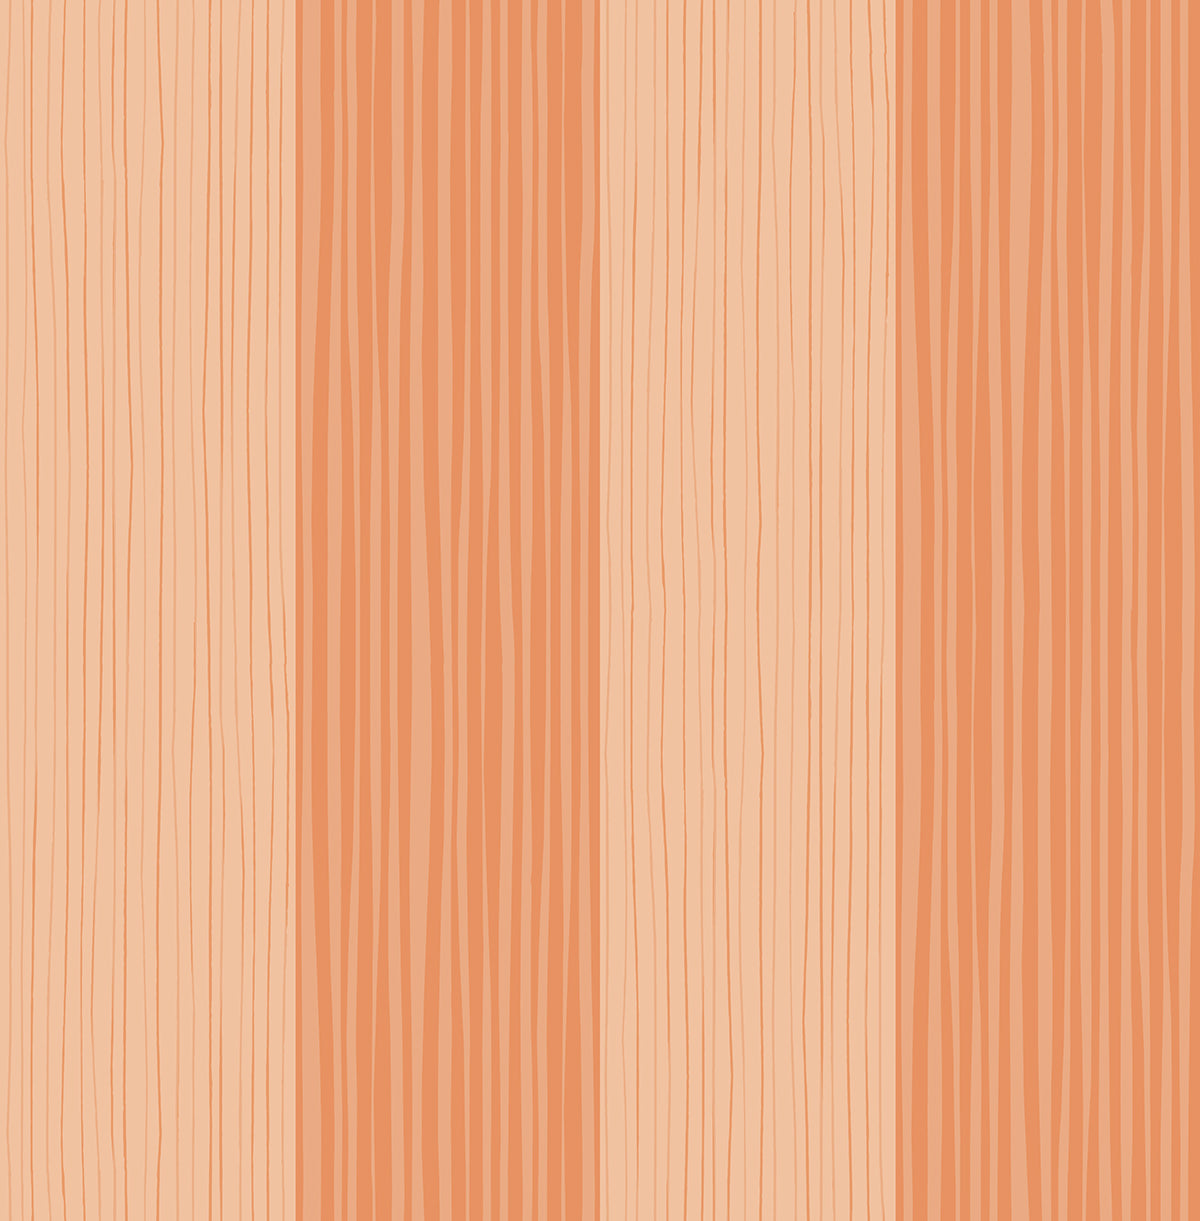 Lines in Stripe